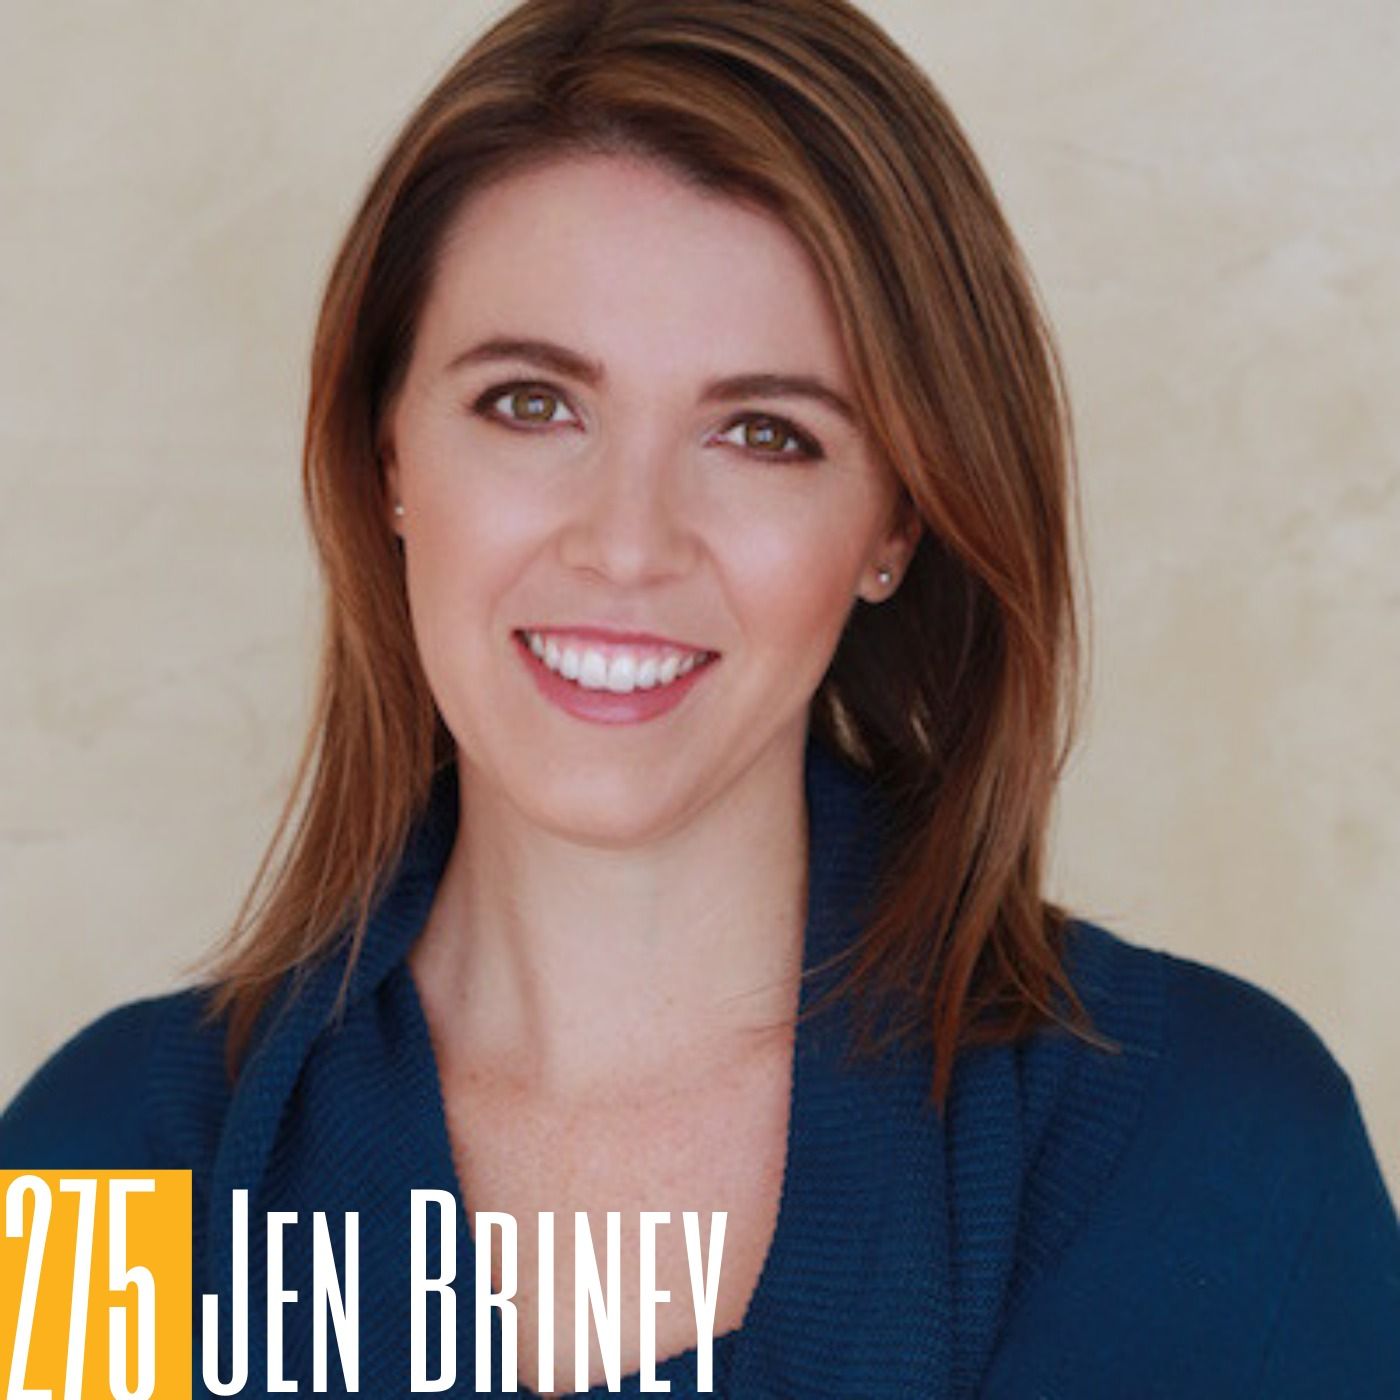 275 Jen Briney - Talking Government, Not Politics